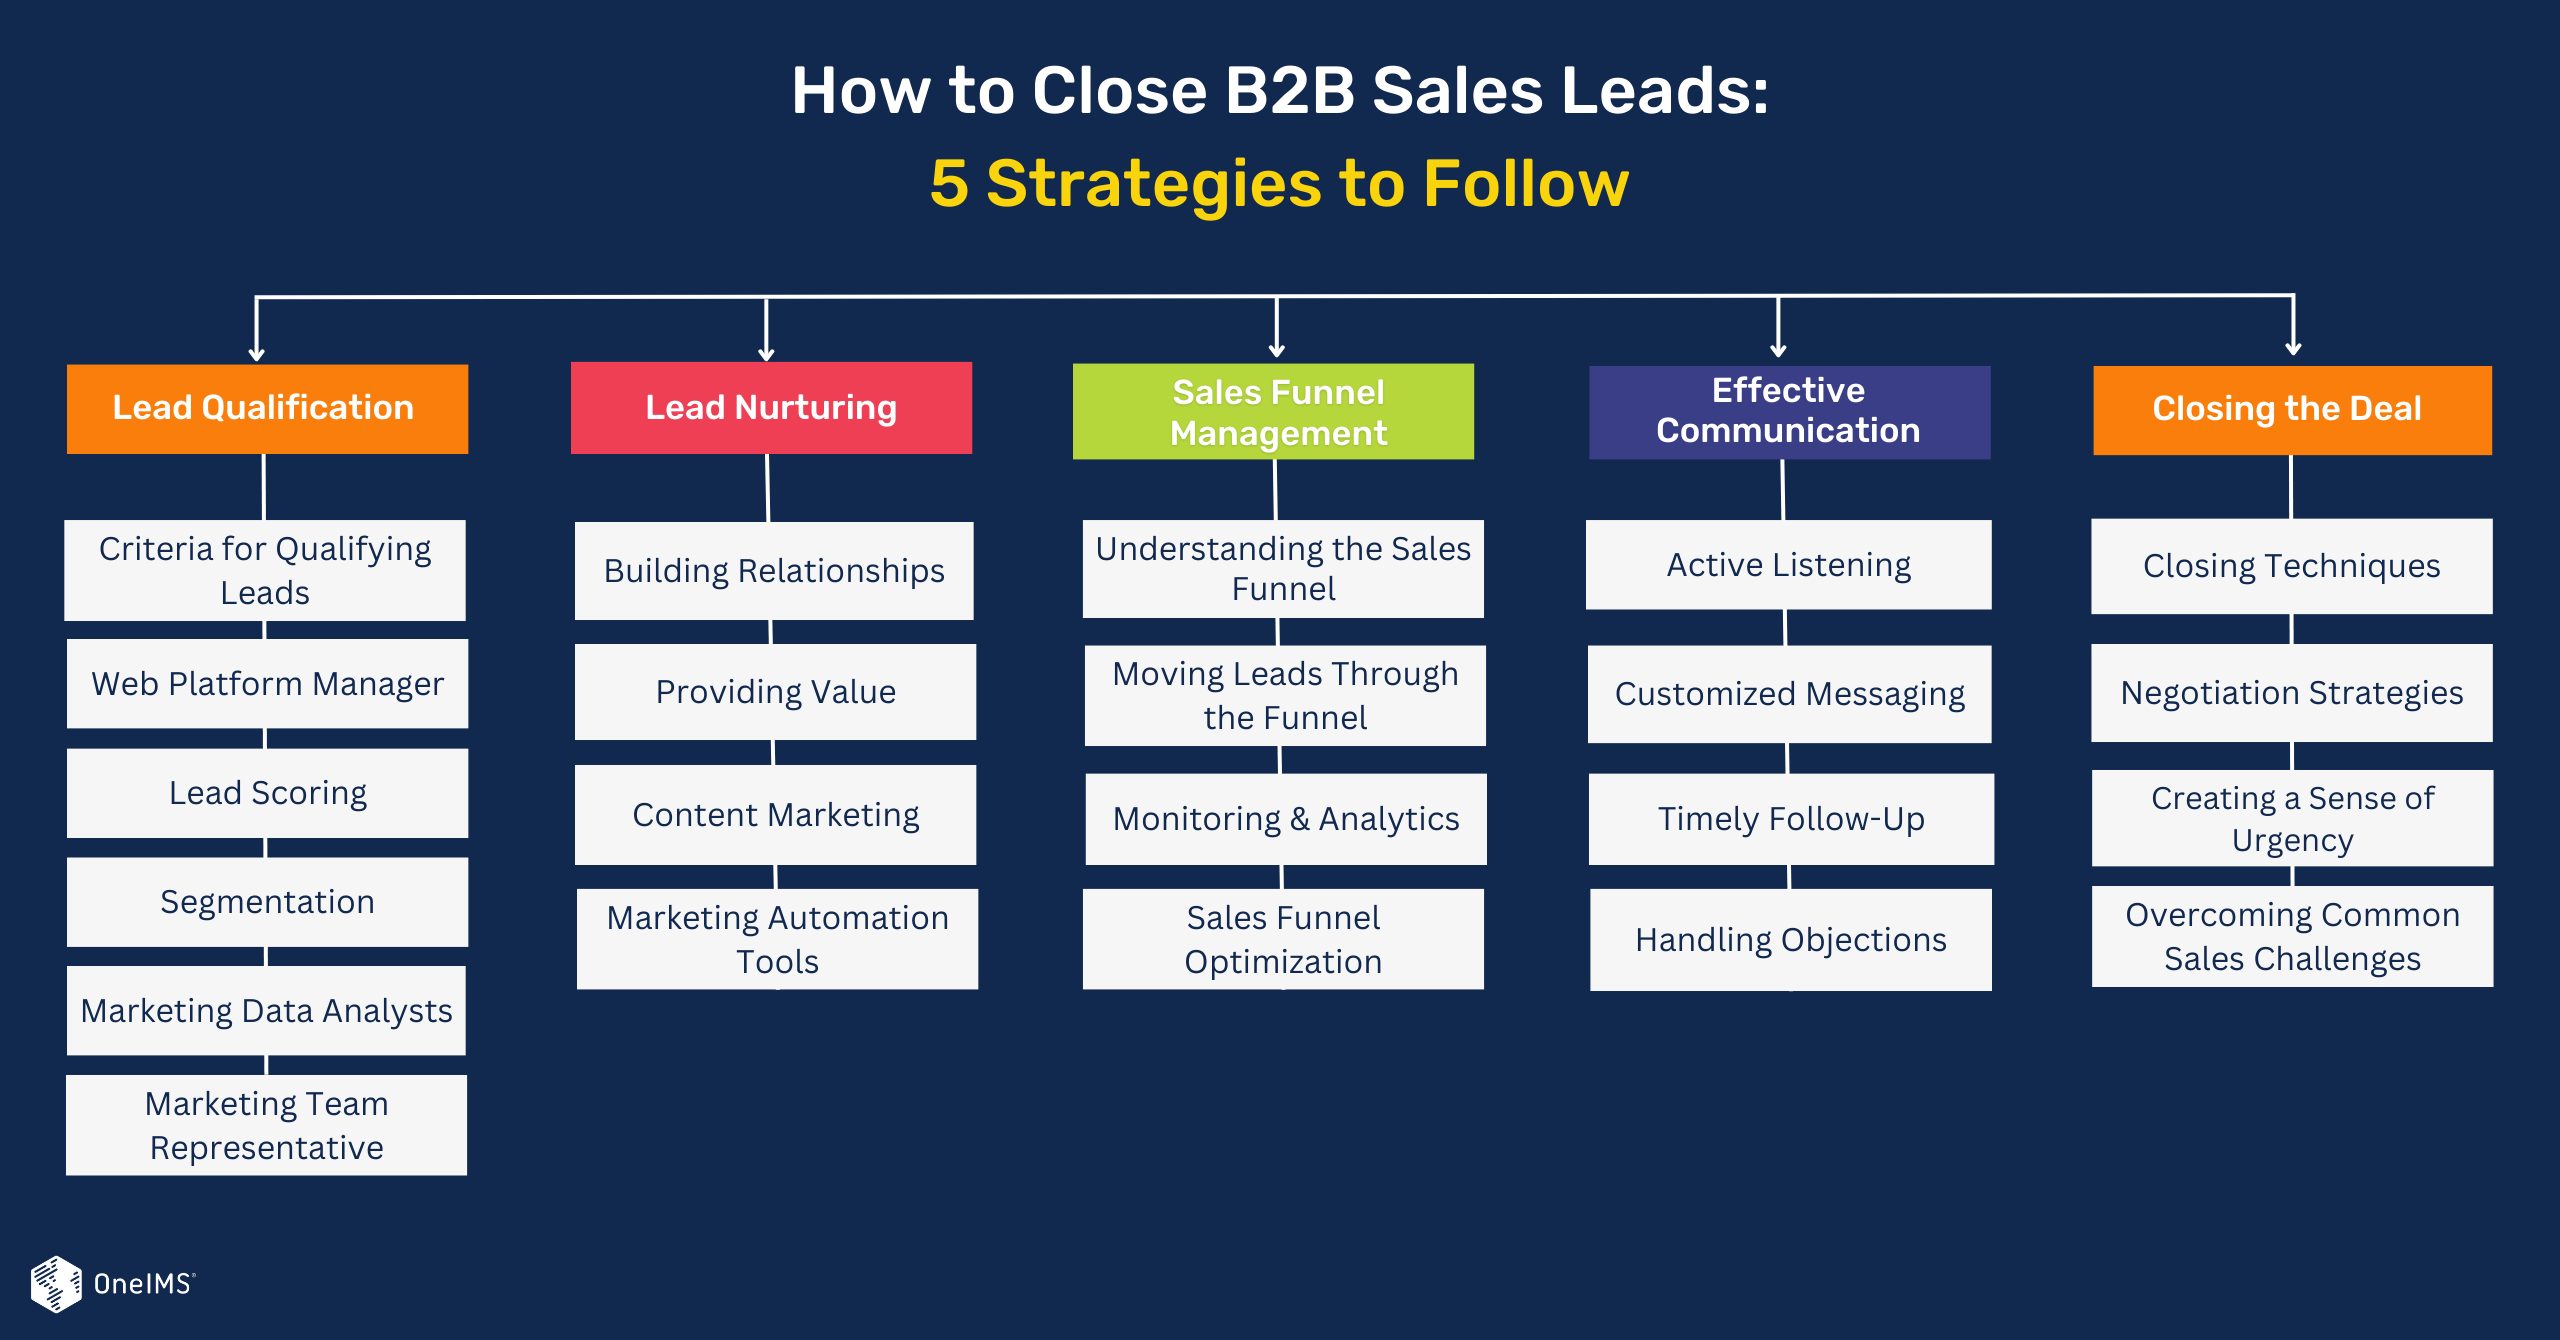 Strategies to Close B2B Sales Leads